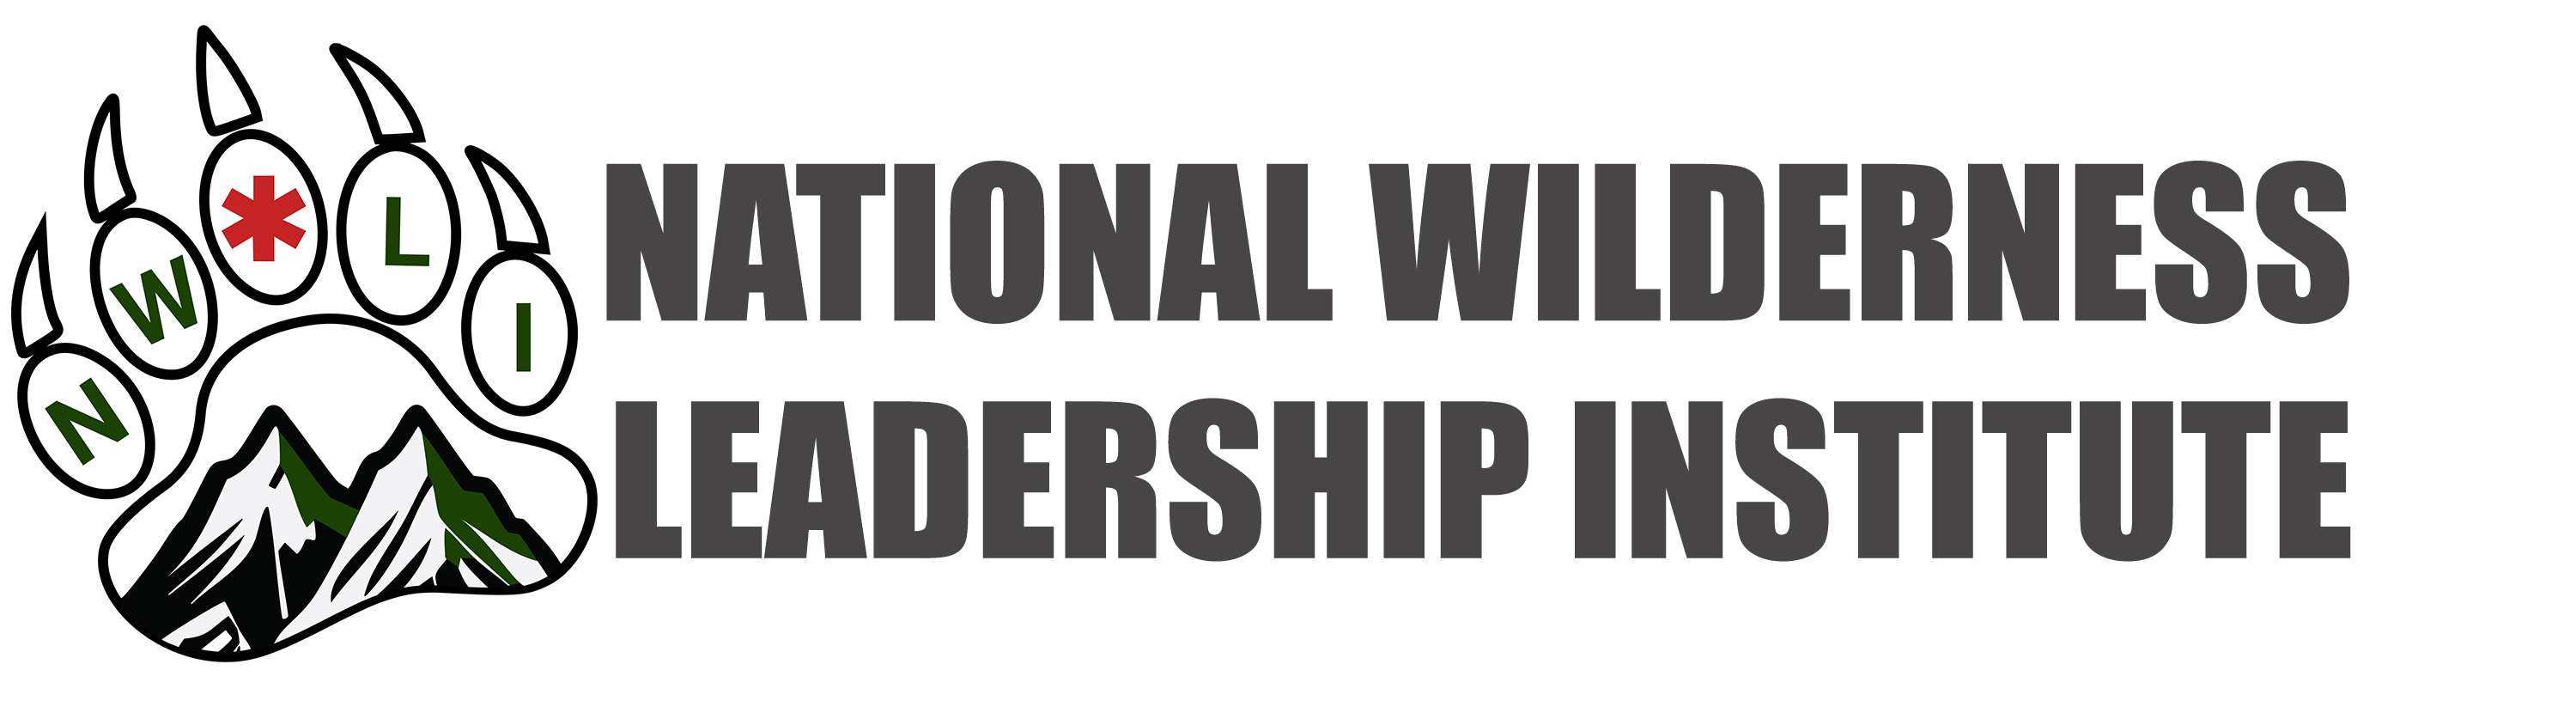 National Wilderness Leadership Institute